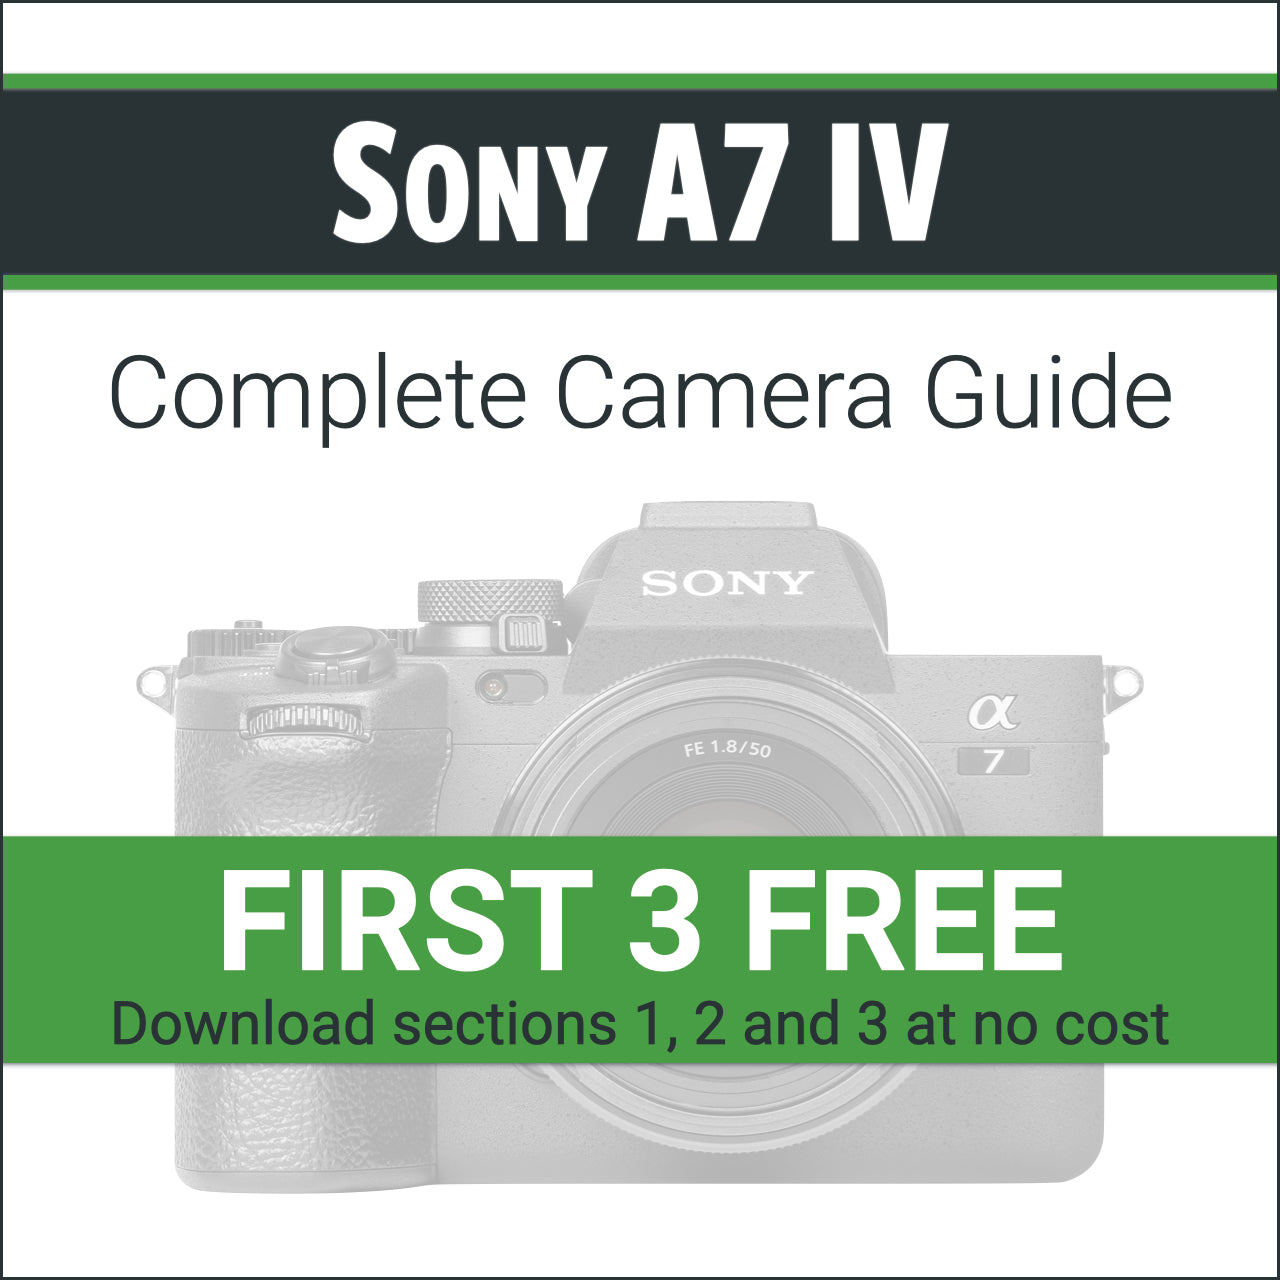 Sony A7 III Vs. A7 IV (Photographer's Guide)